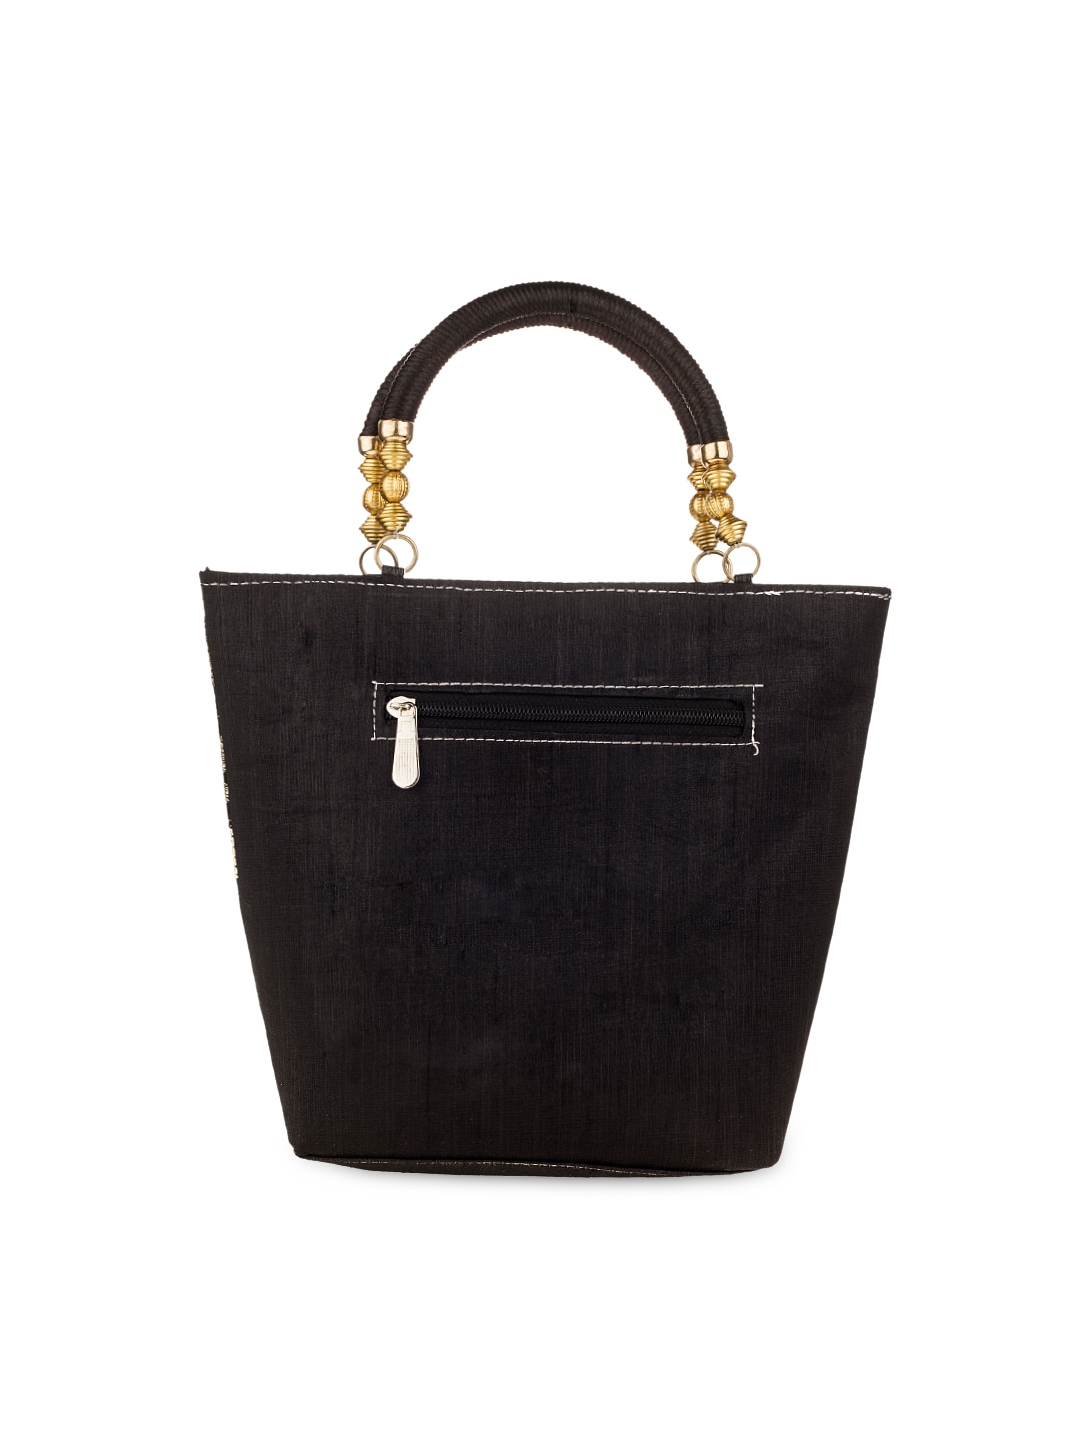 Myntra Satchel Bags Black Handbag 590814 | Buy Myntra Satchel Bags Handbags at best price online ...